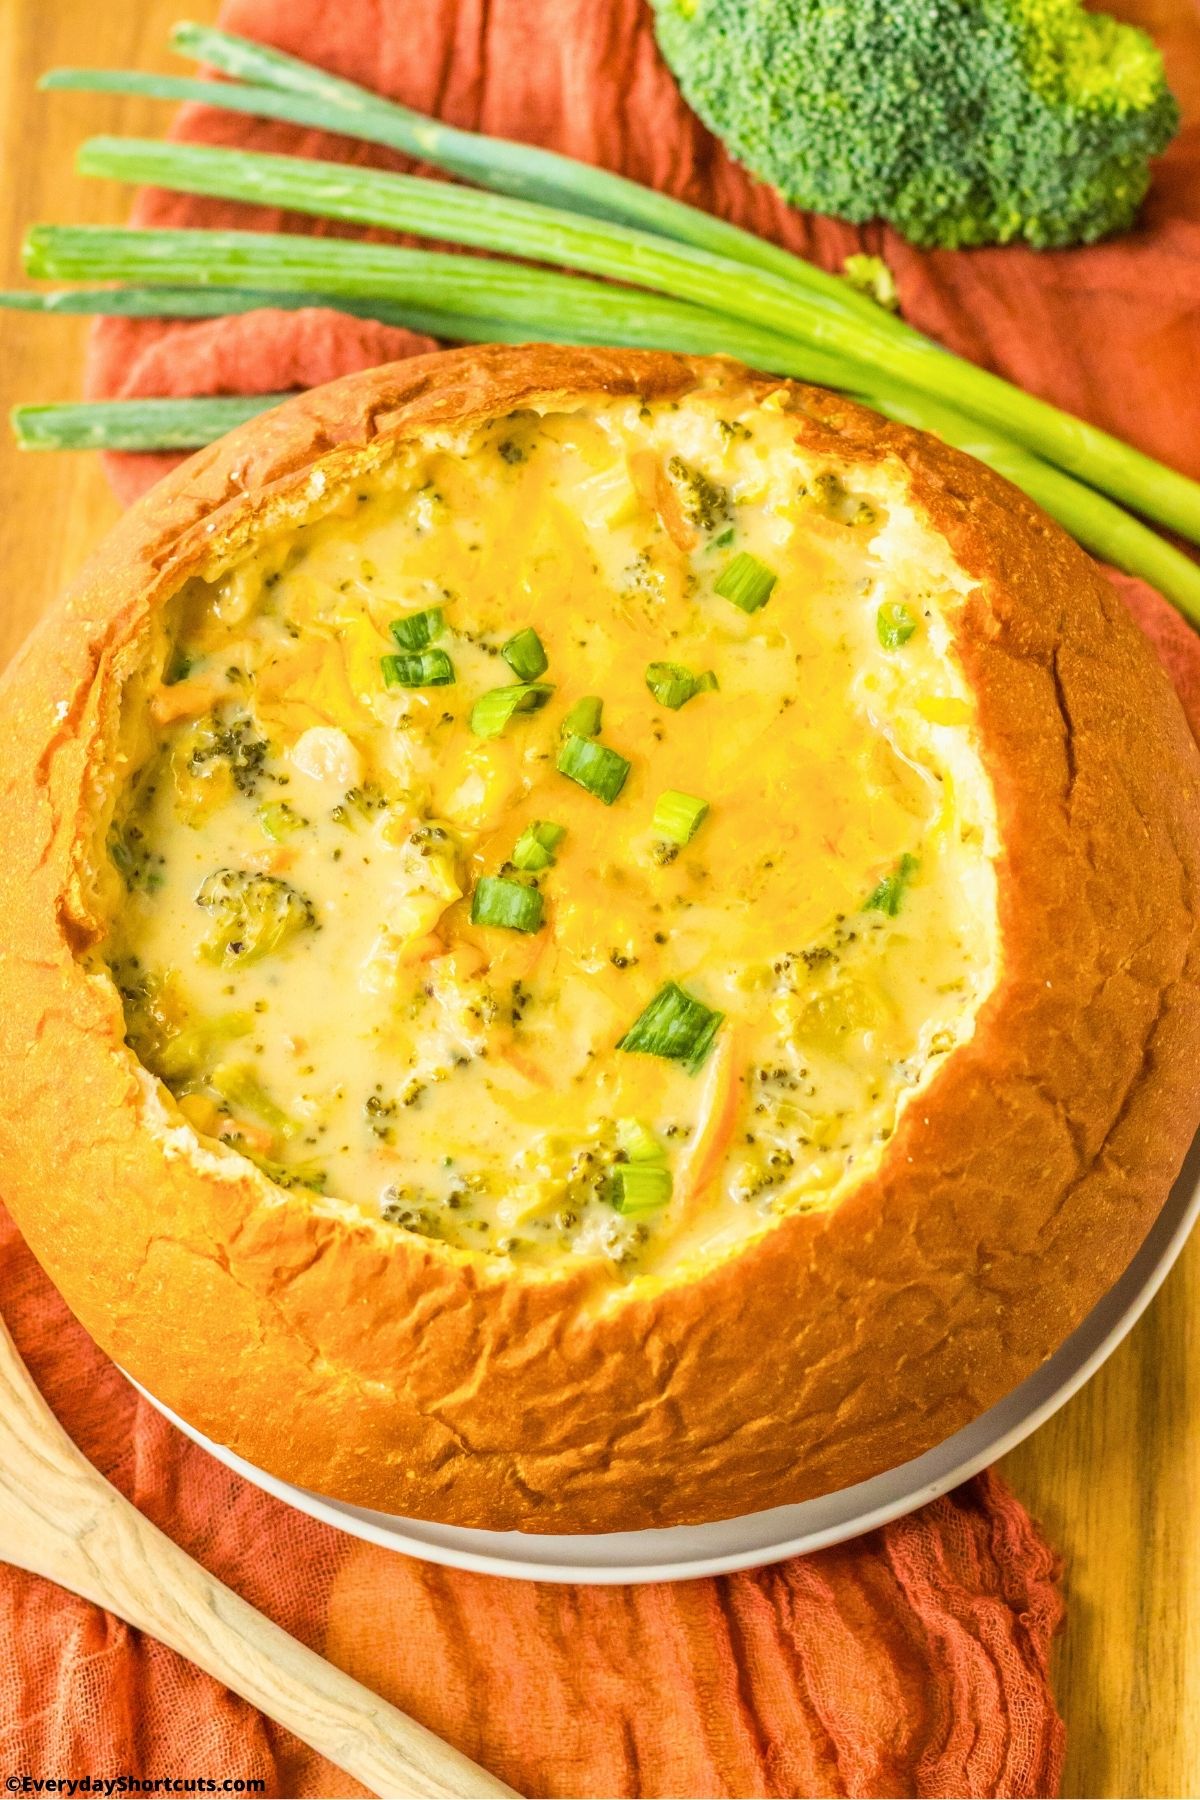 panera broccoli cheddar soup in a bread bowl